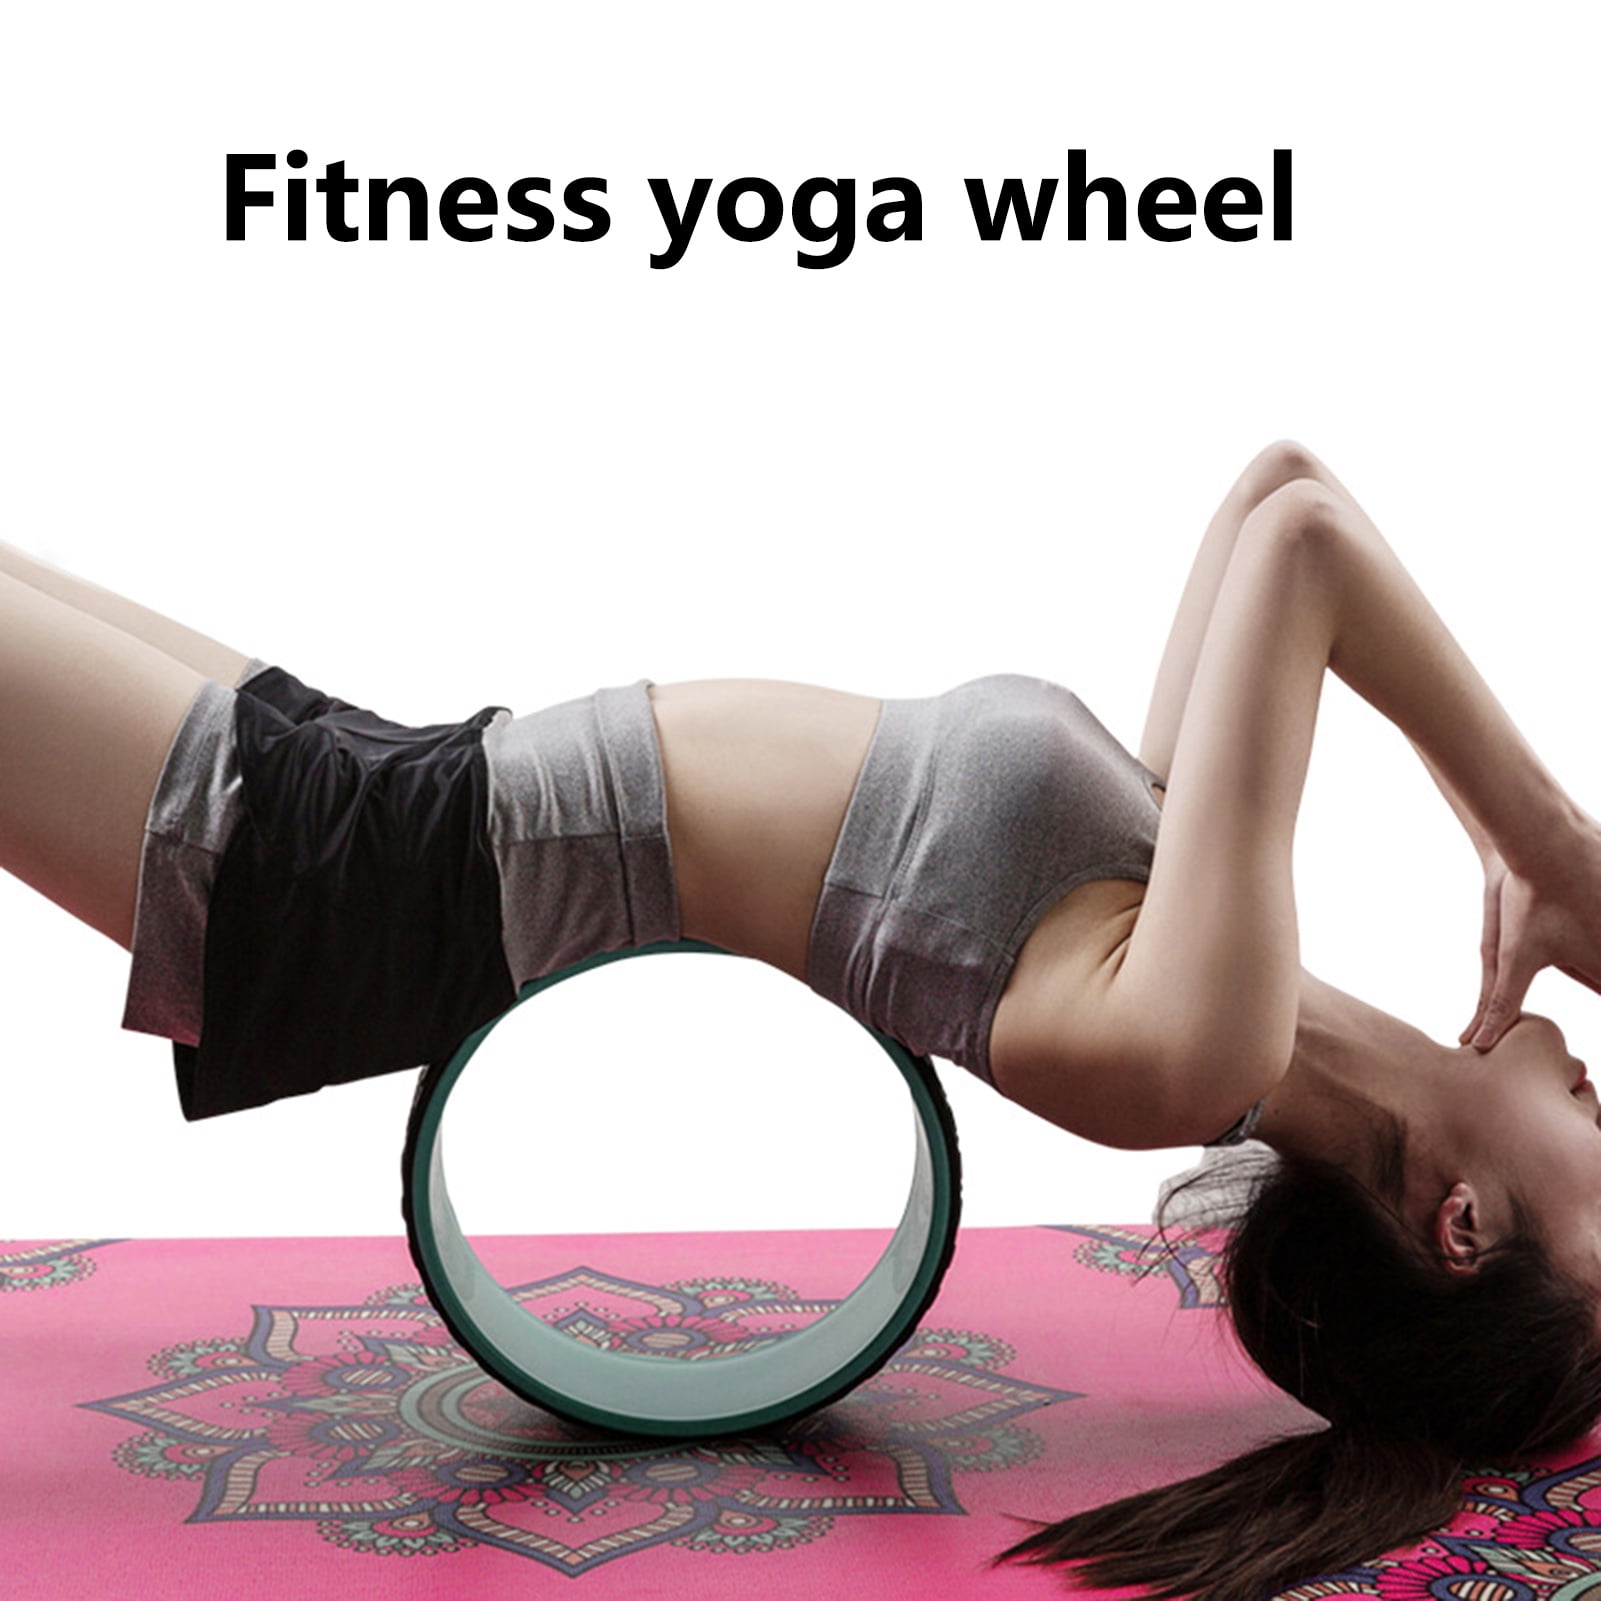 Yoga wheel exercise equipment - Exercise